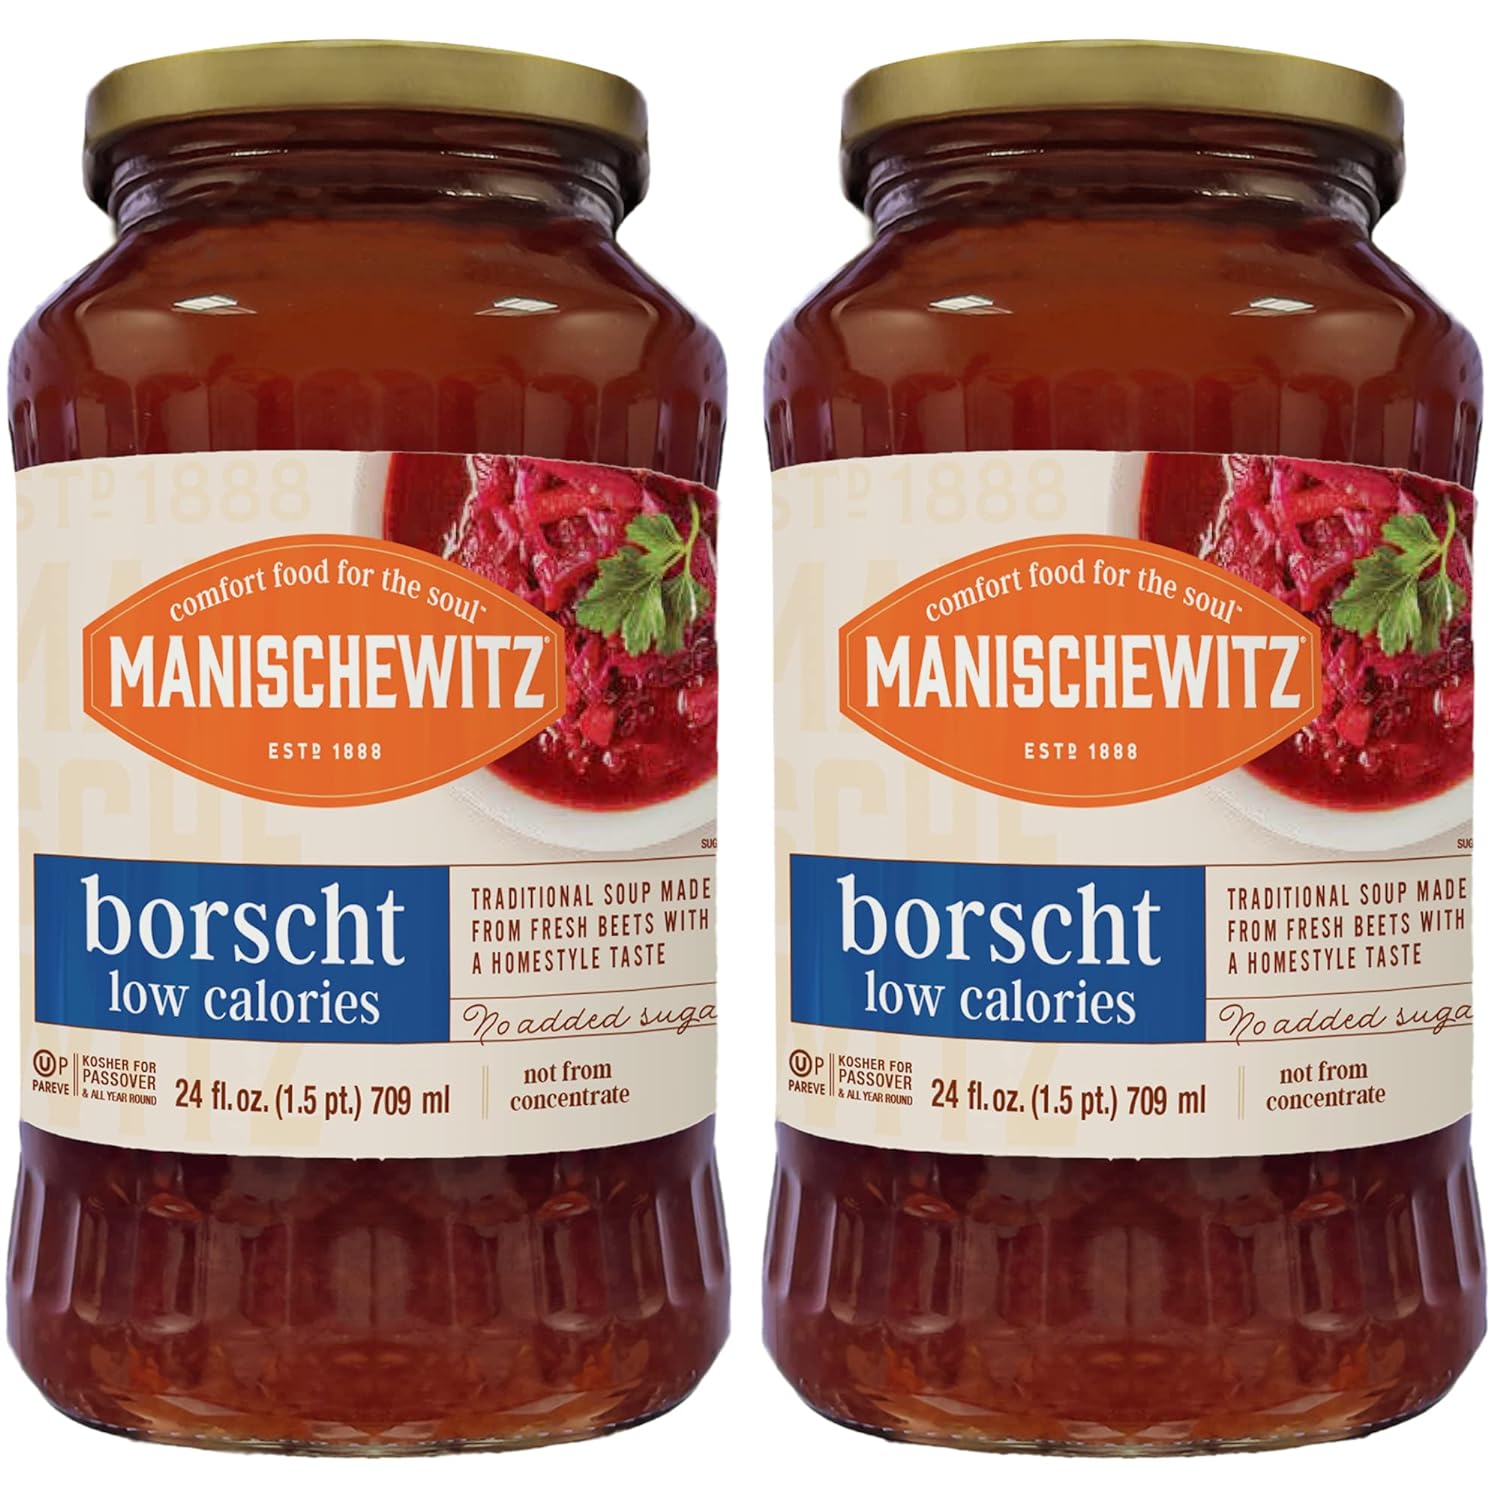 Manischewitz Low Calorie Borscht 24oz (2 Pack) | Made with Fresh Beets, Home-style Taste, Gluten Free